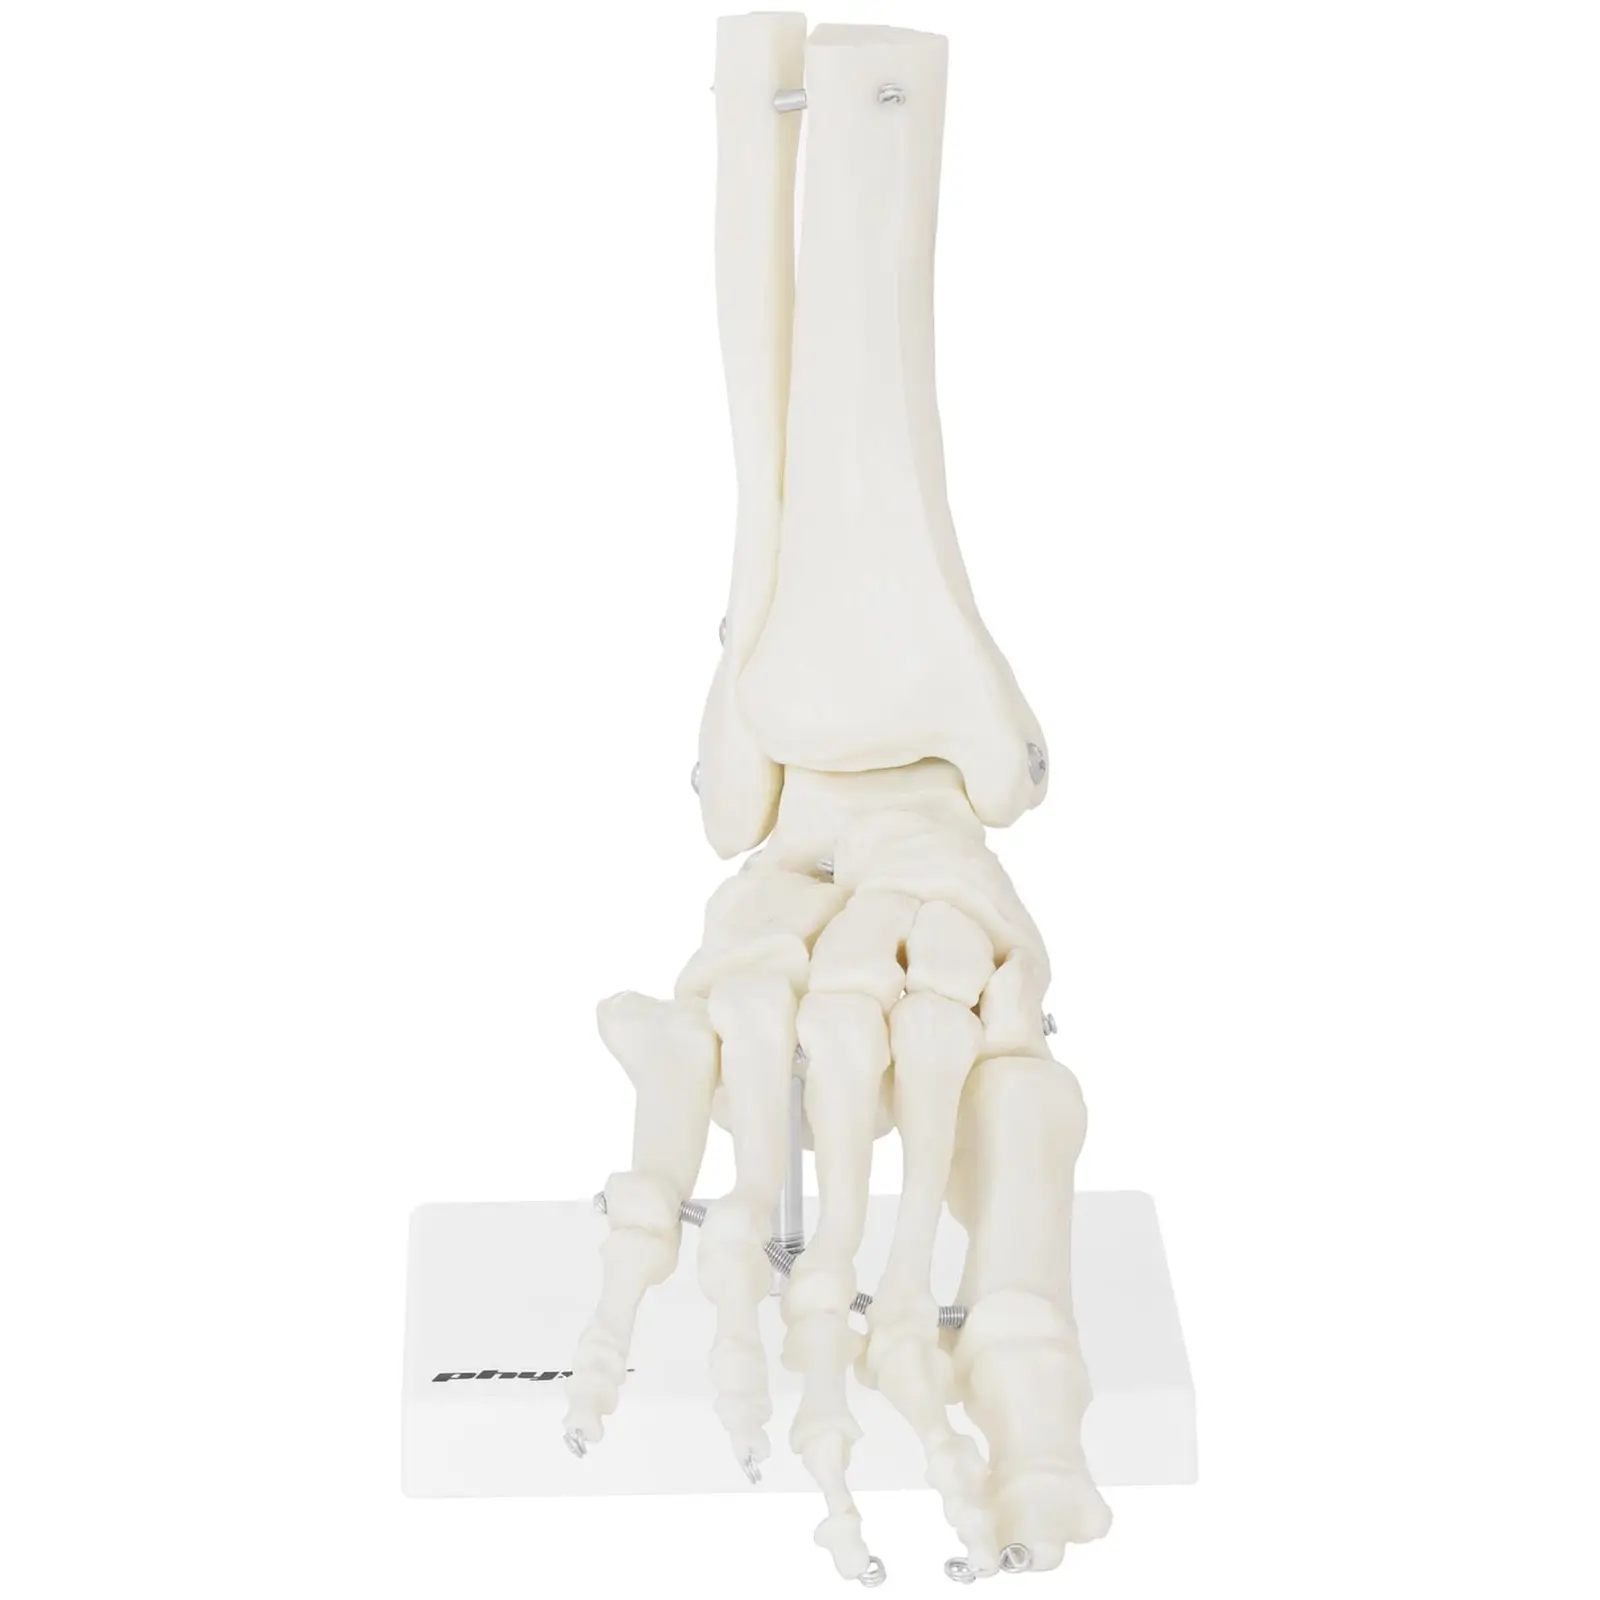 Maquette anatomique pied humain - 5